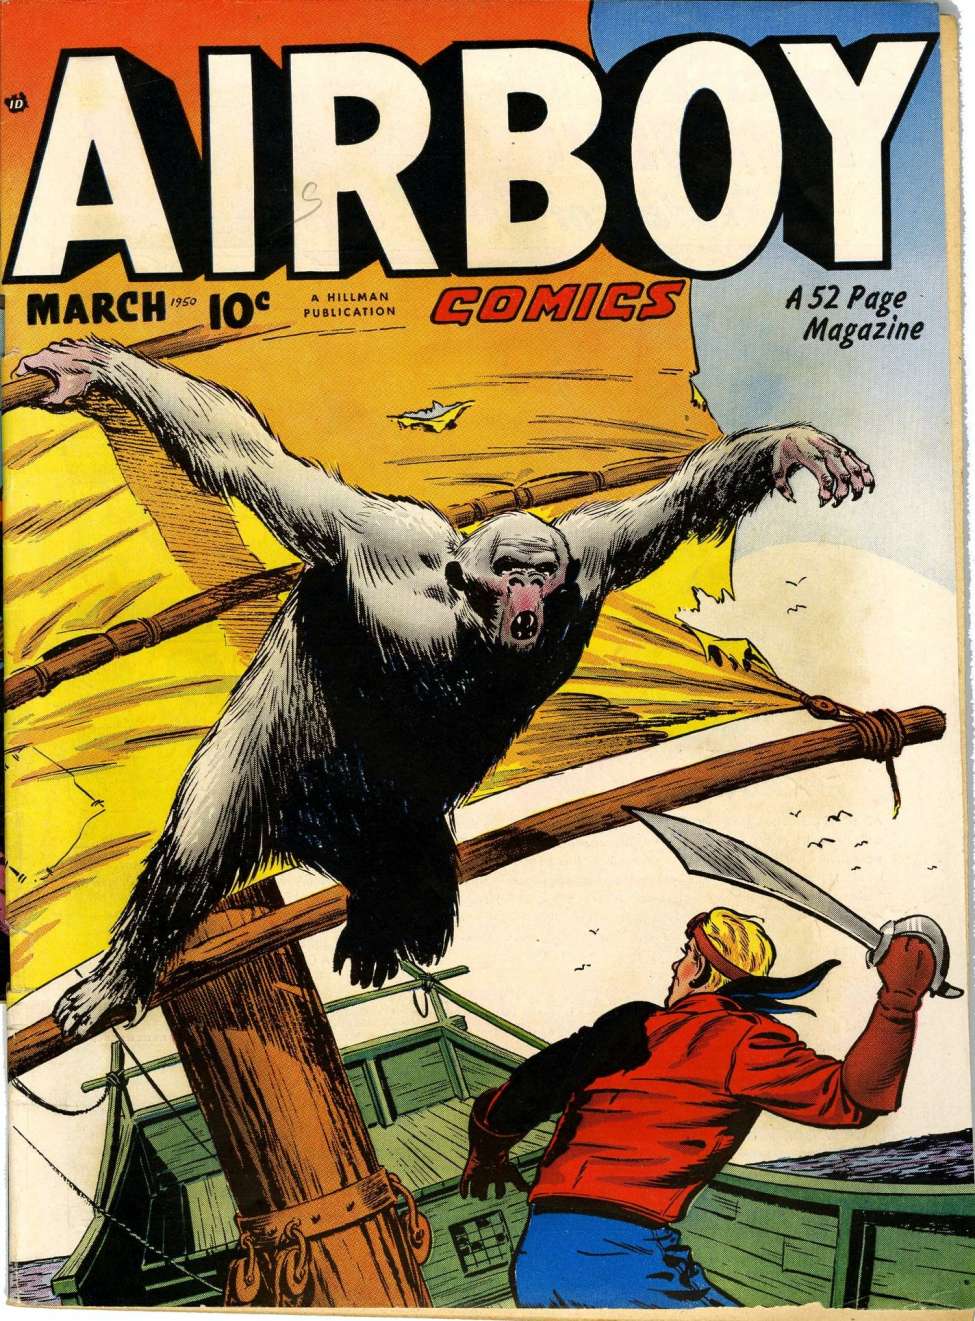 Comic Book Cover For Airboy Comics v7 2 (alt)